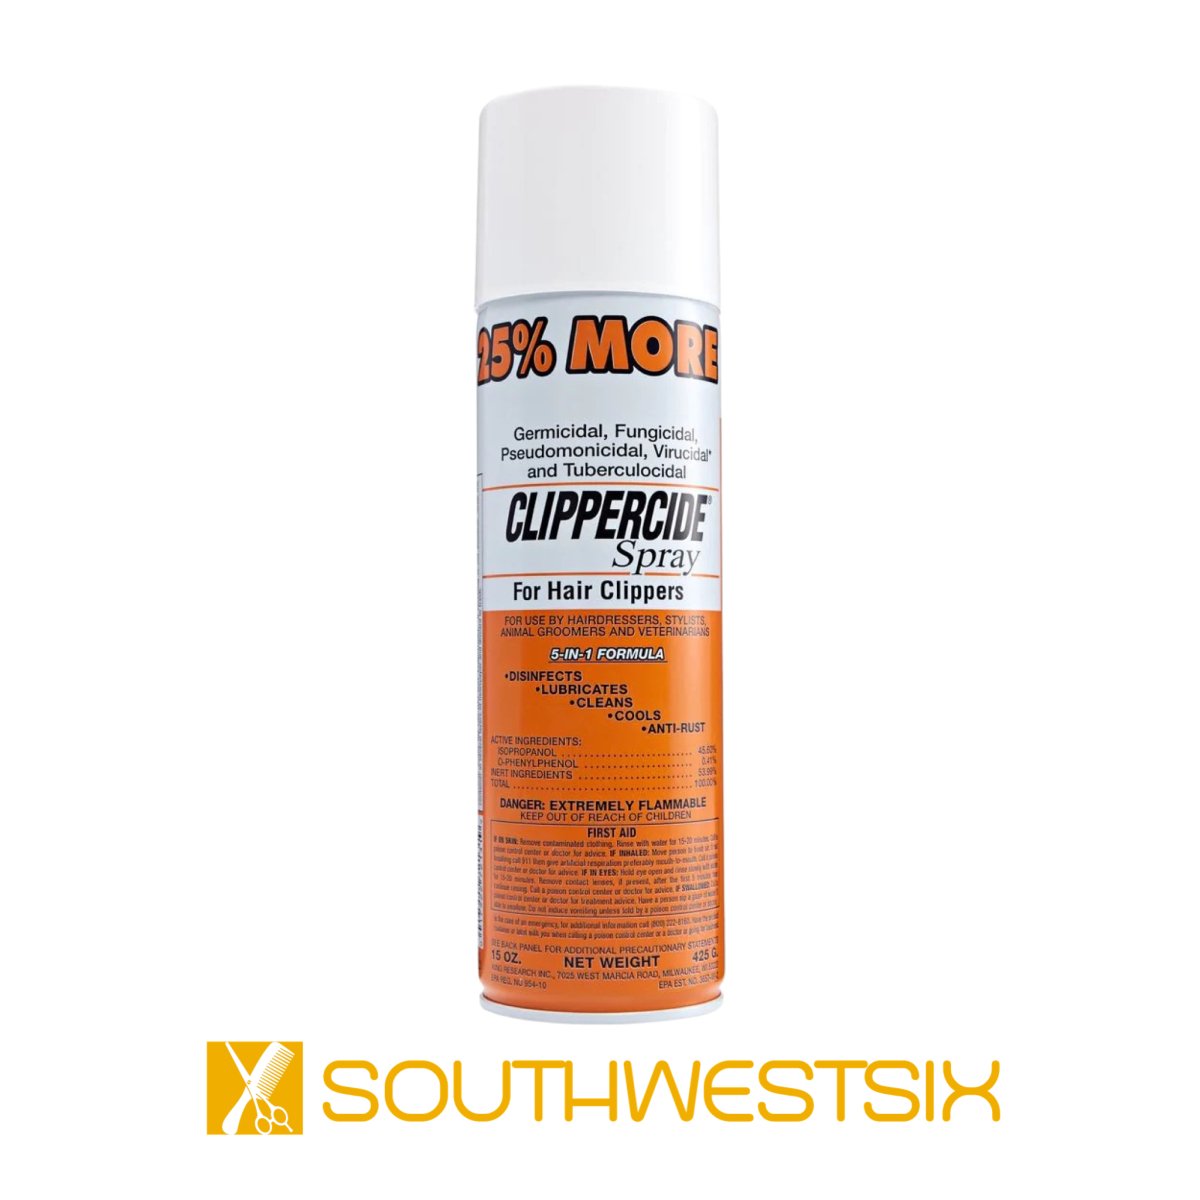 Clippercide Spray - Southwestsix Cosmetics Clippercide Spray Disinfectant clippercide Southwestsix Cosmetics ME-QSO9-DIU1 017922721319 Clippercide Spray